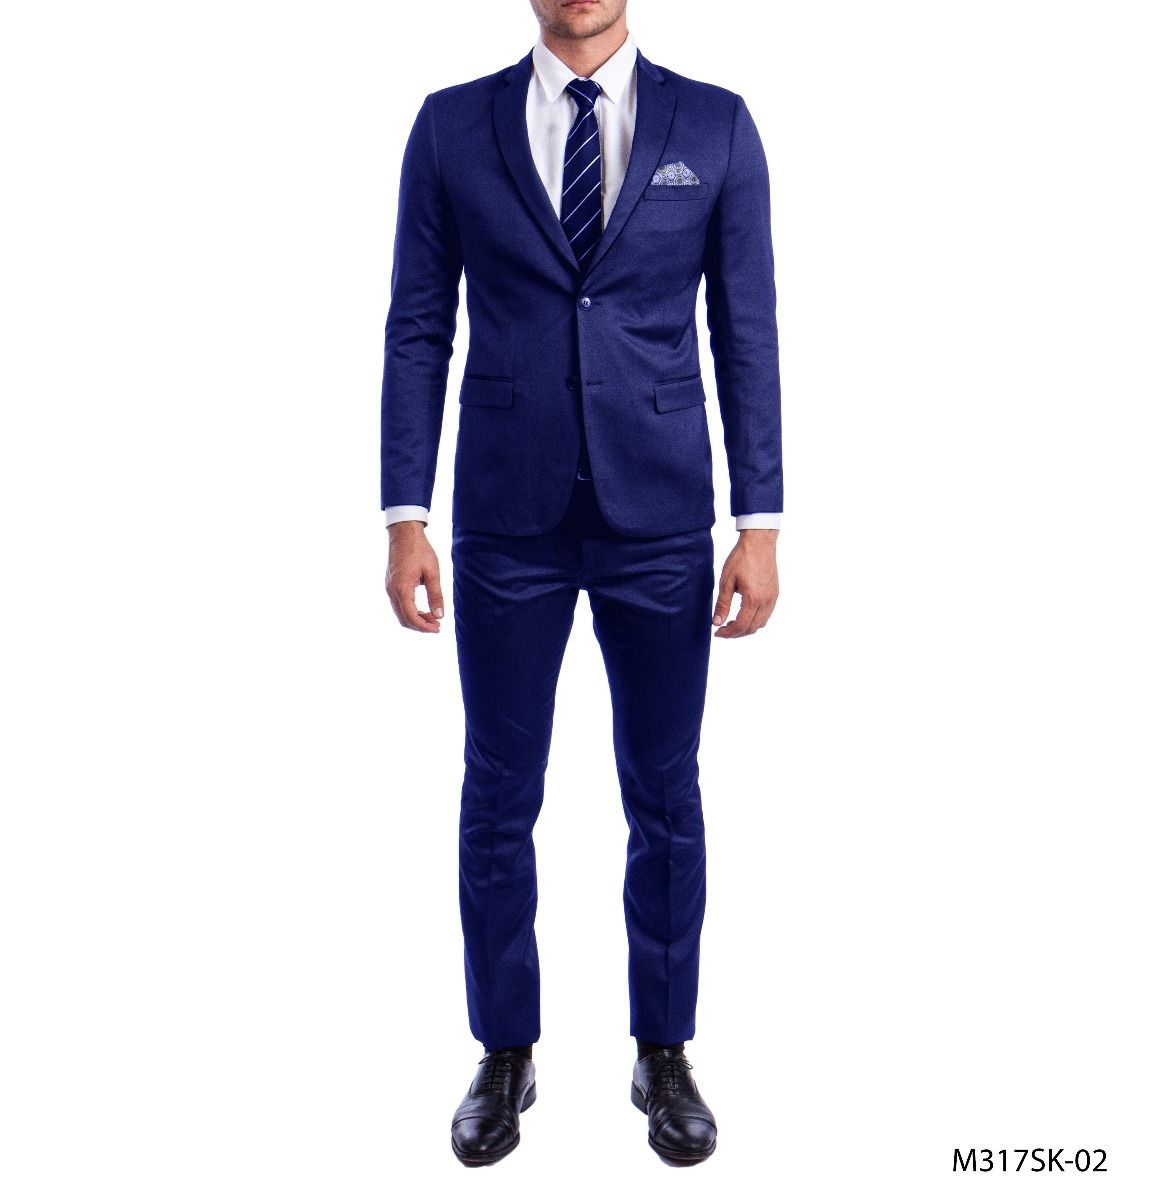 Sean Alexander Men's Outlet 2 Piece Skinny Fit Suit - Executive Style